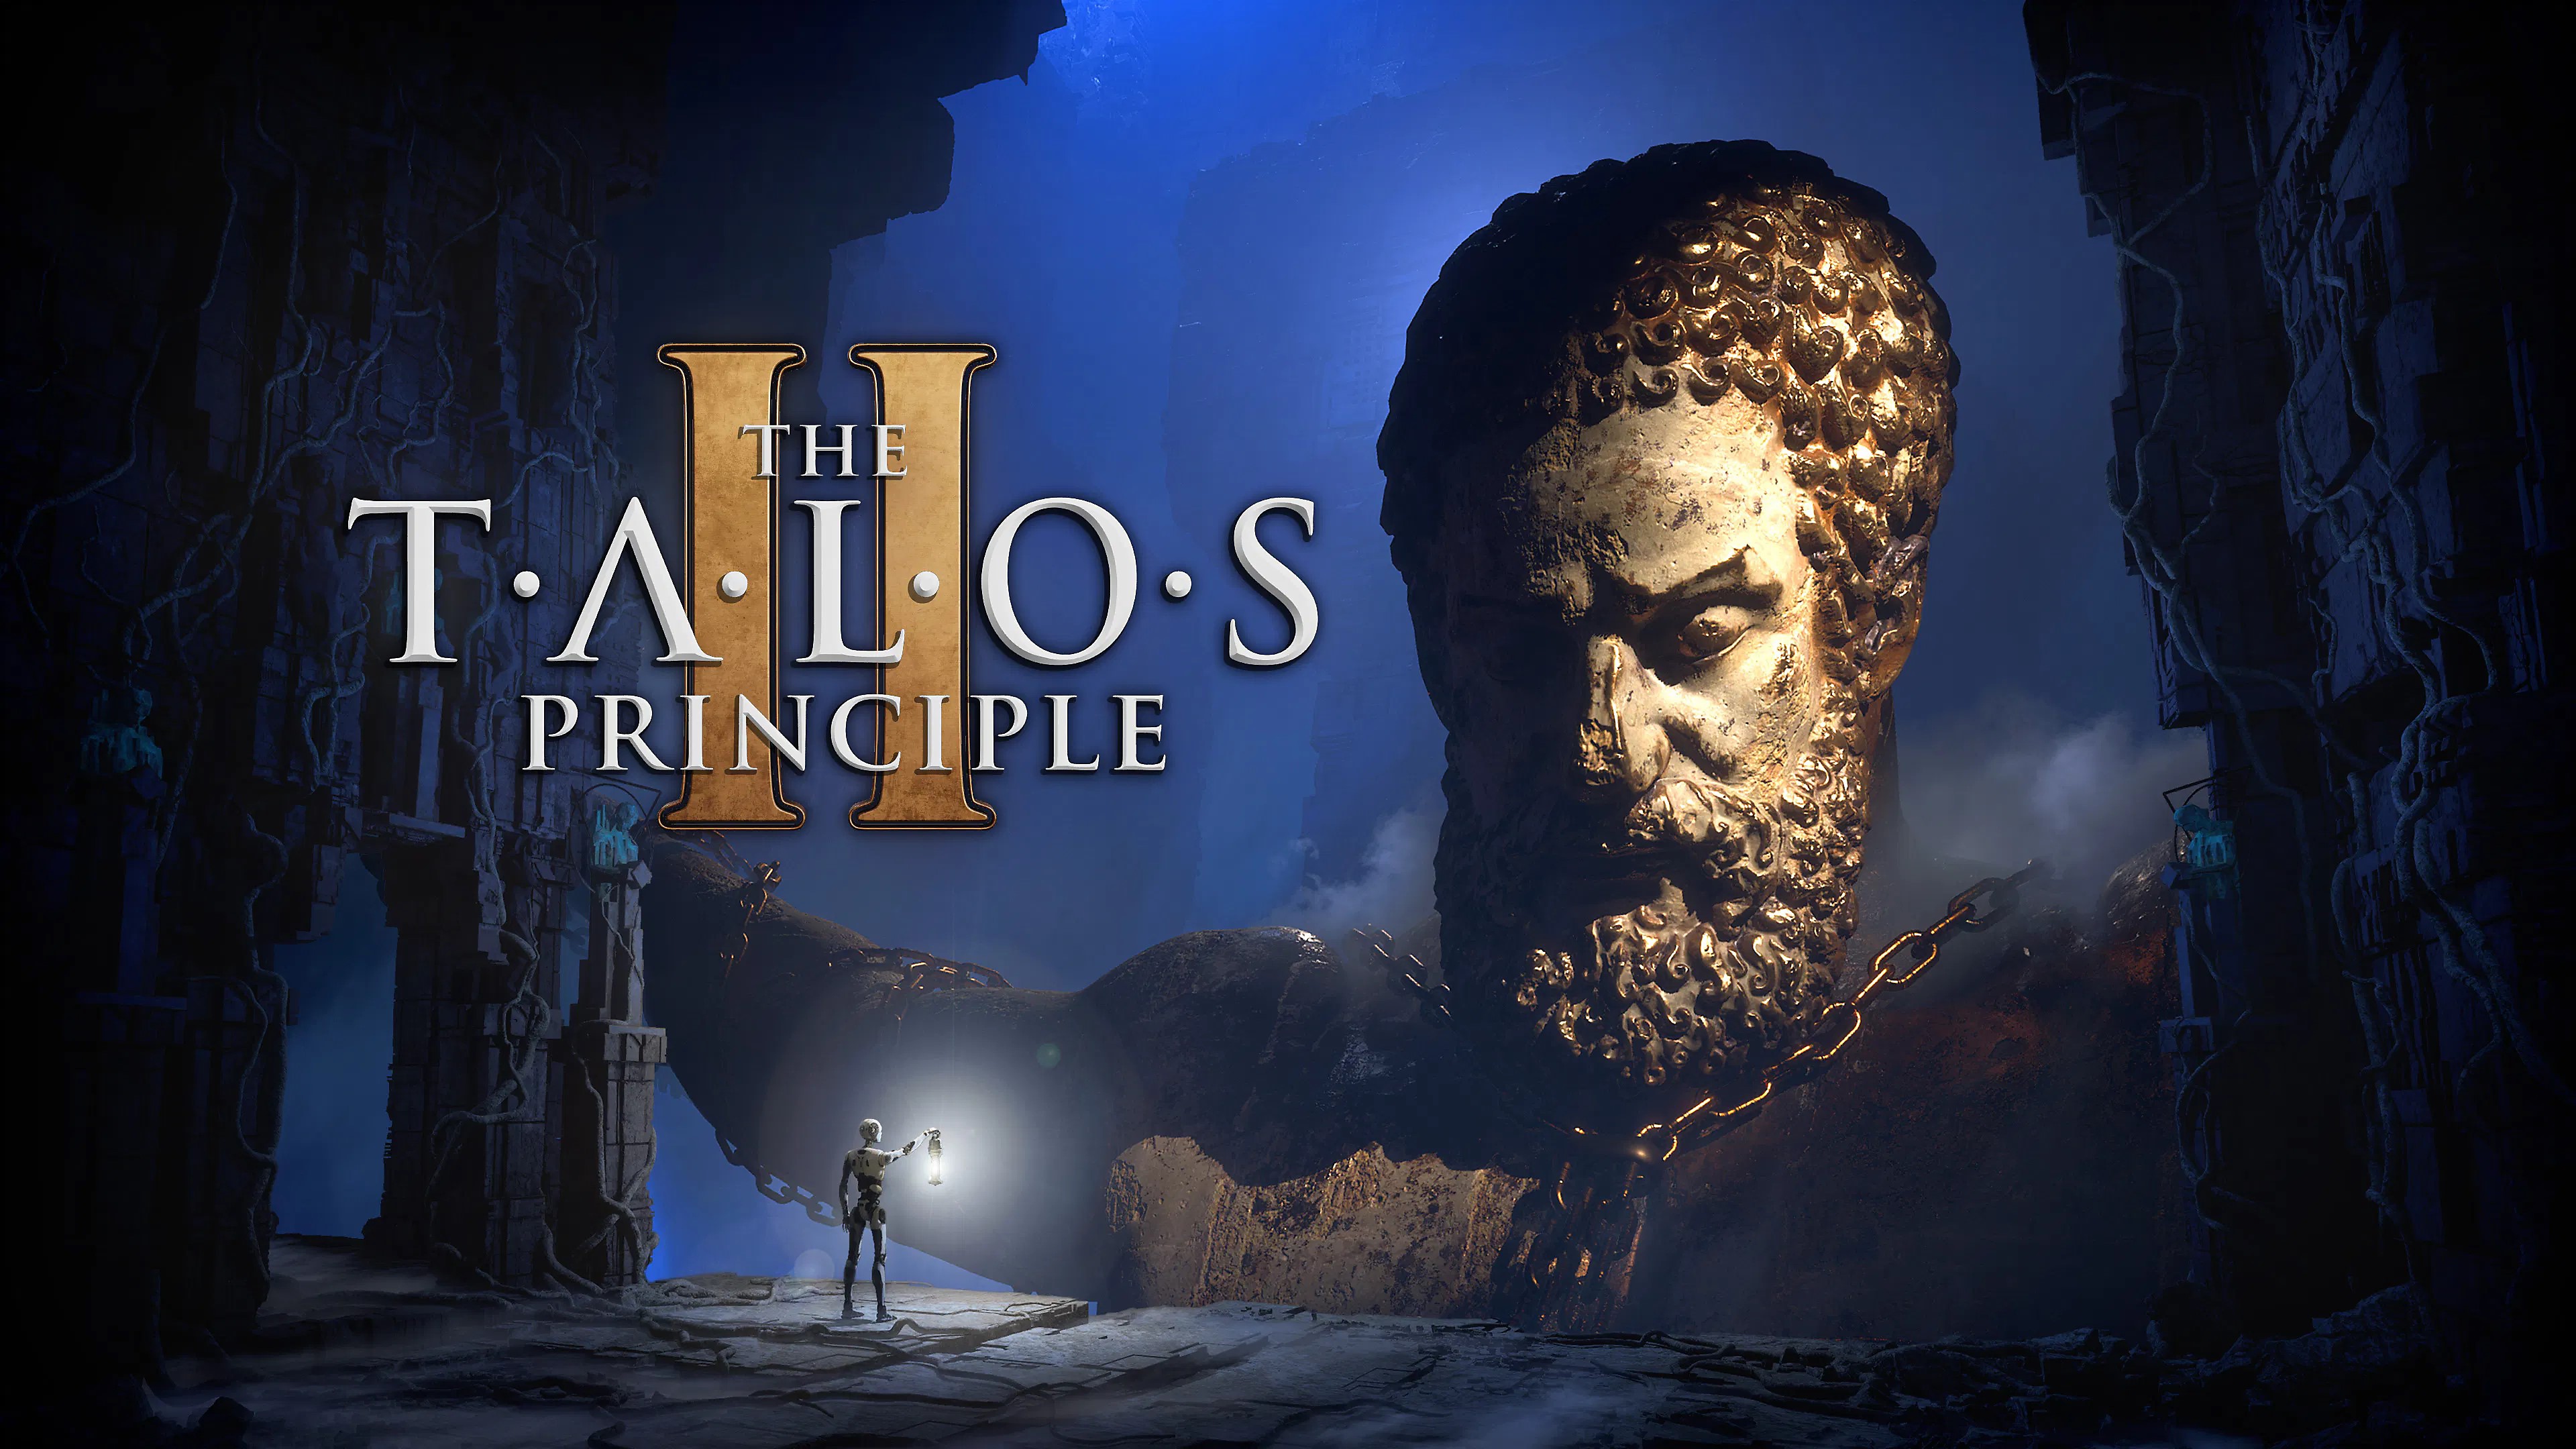 The Talos Principle 2 - Launch Trailer | PS5 Games